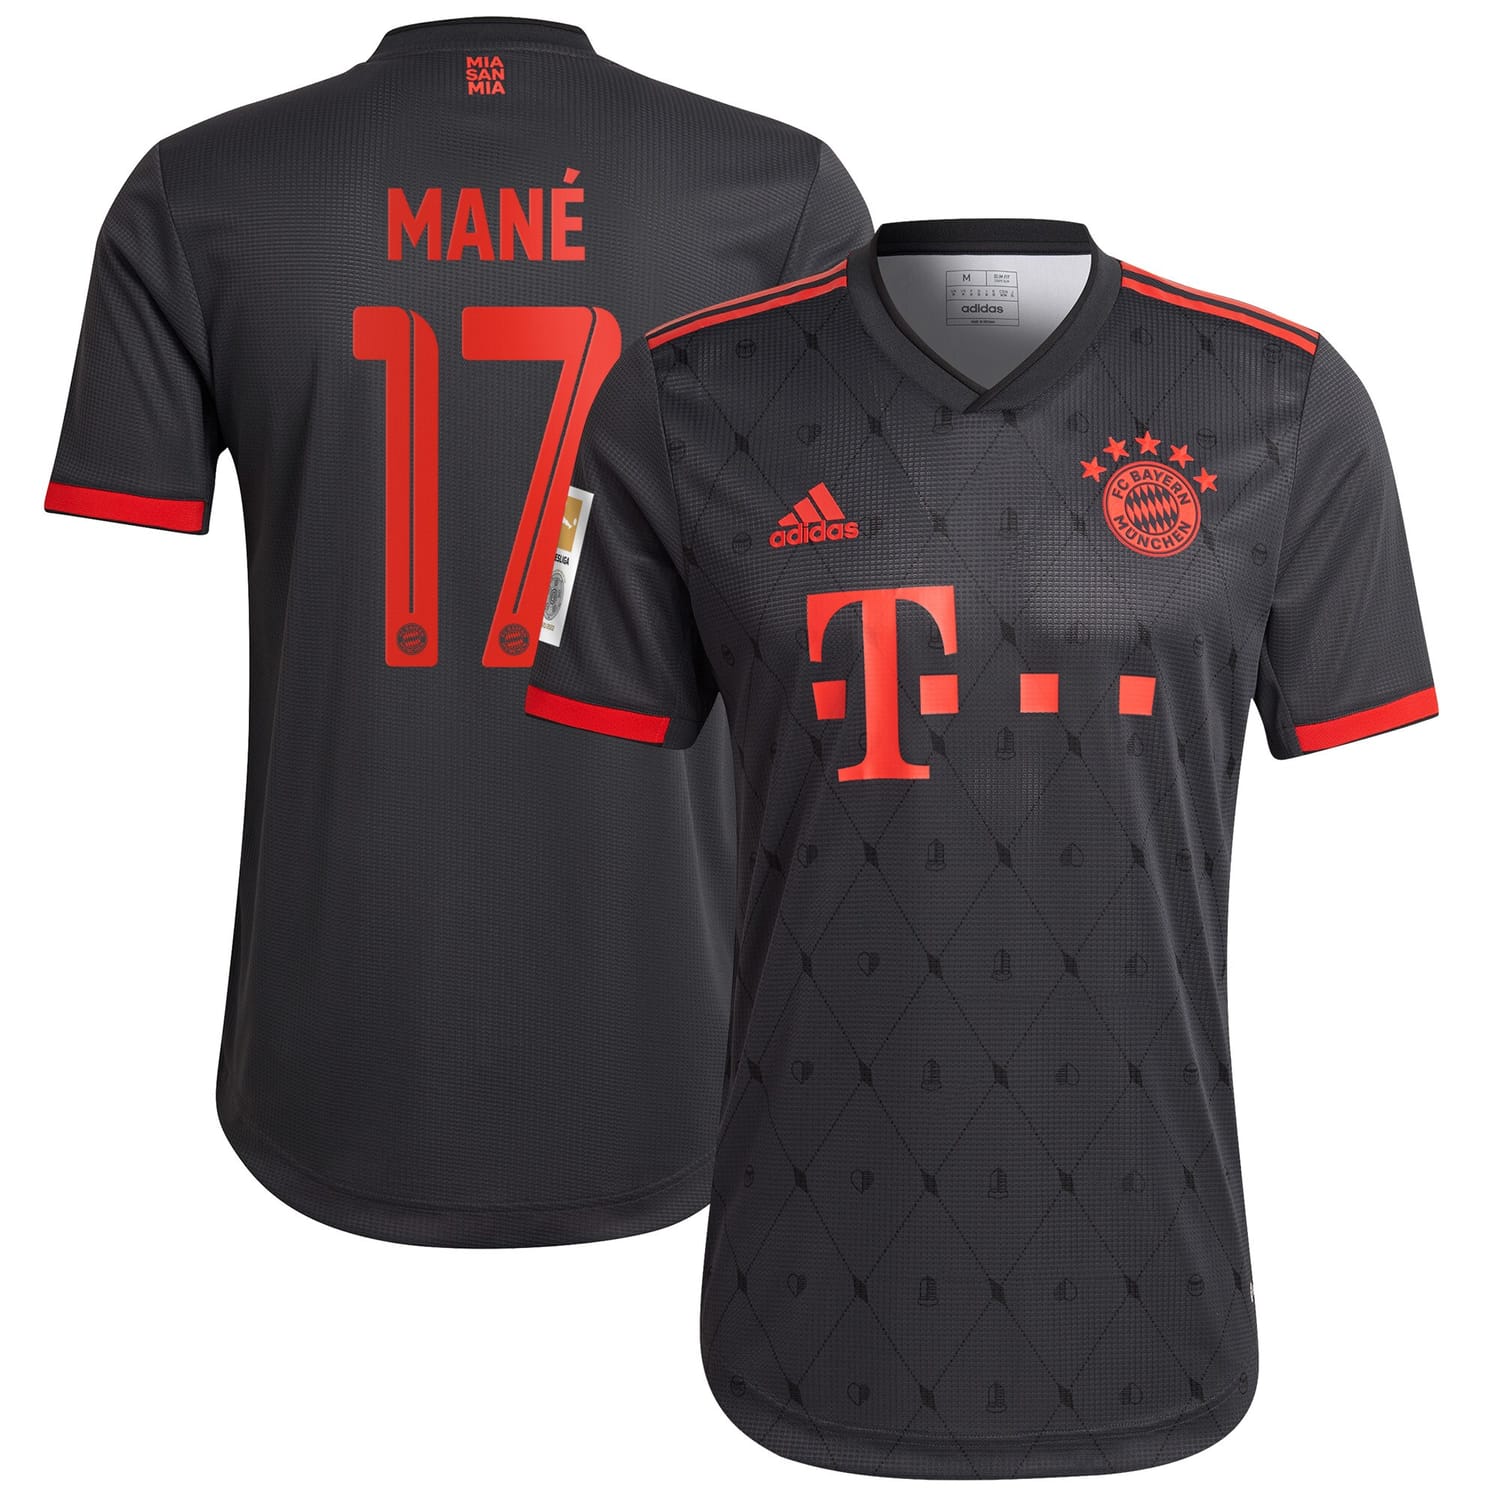 Bundesliga Bayern Munich Third Authentic Jersey Shirt Charcoal 2022-23 player Sadio Mané printing for Men